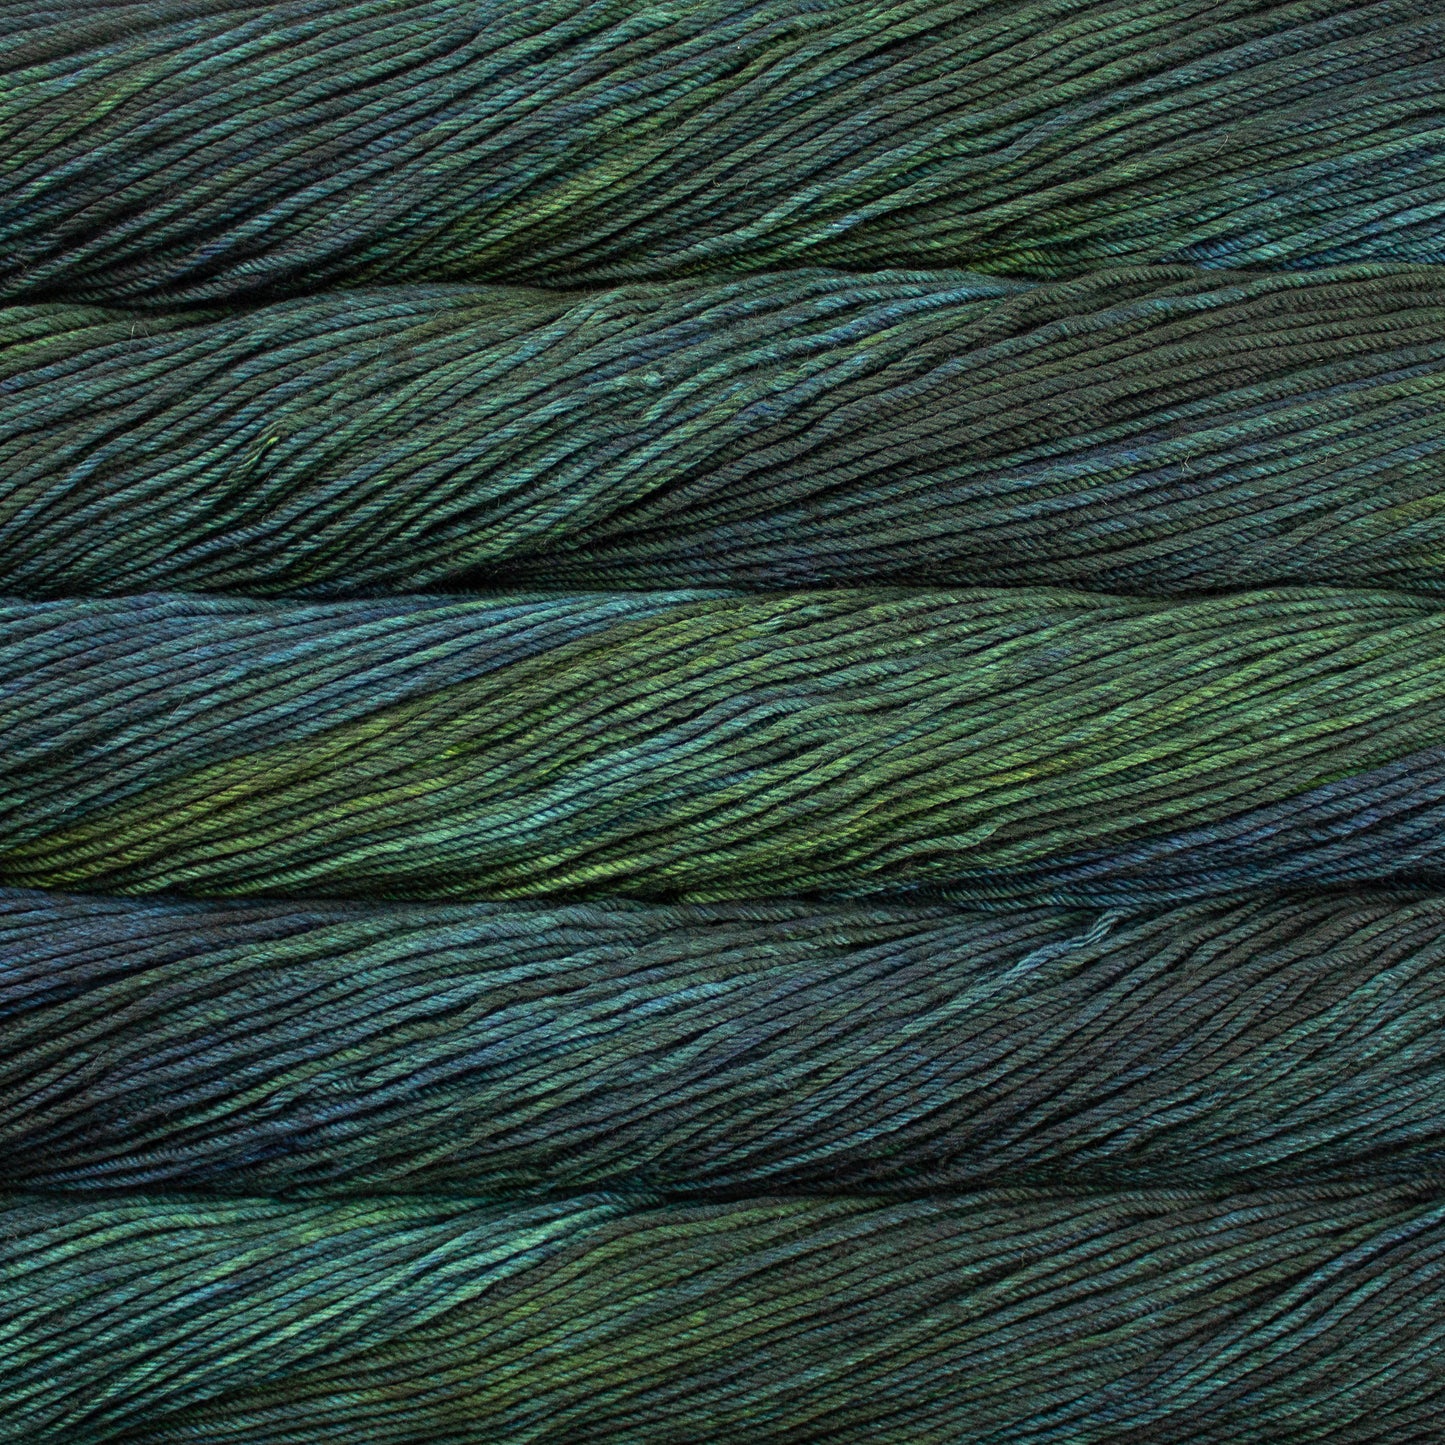 Rios - Superwash Merino Wool -  Worsted - 100g - 10 Colorways